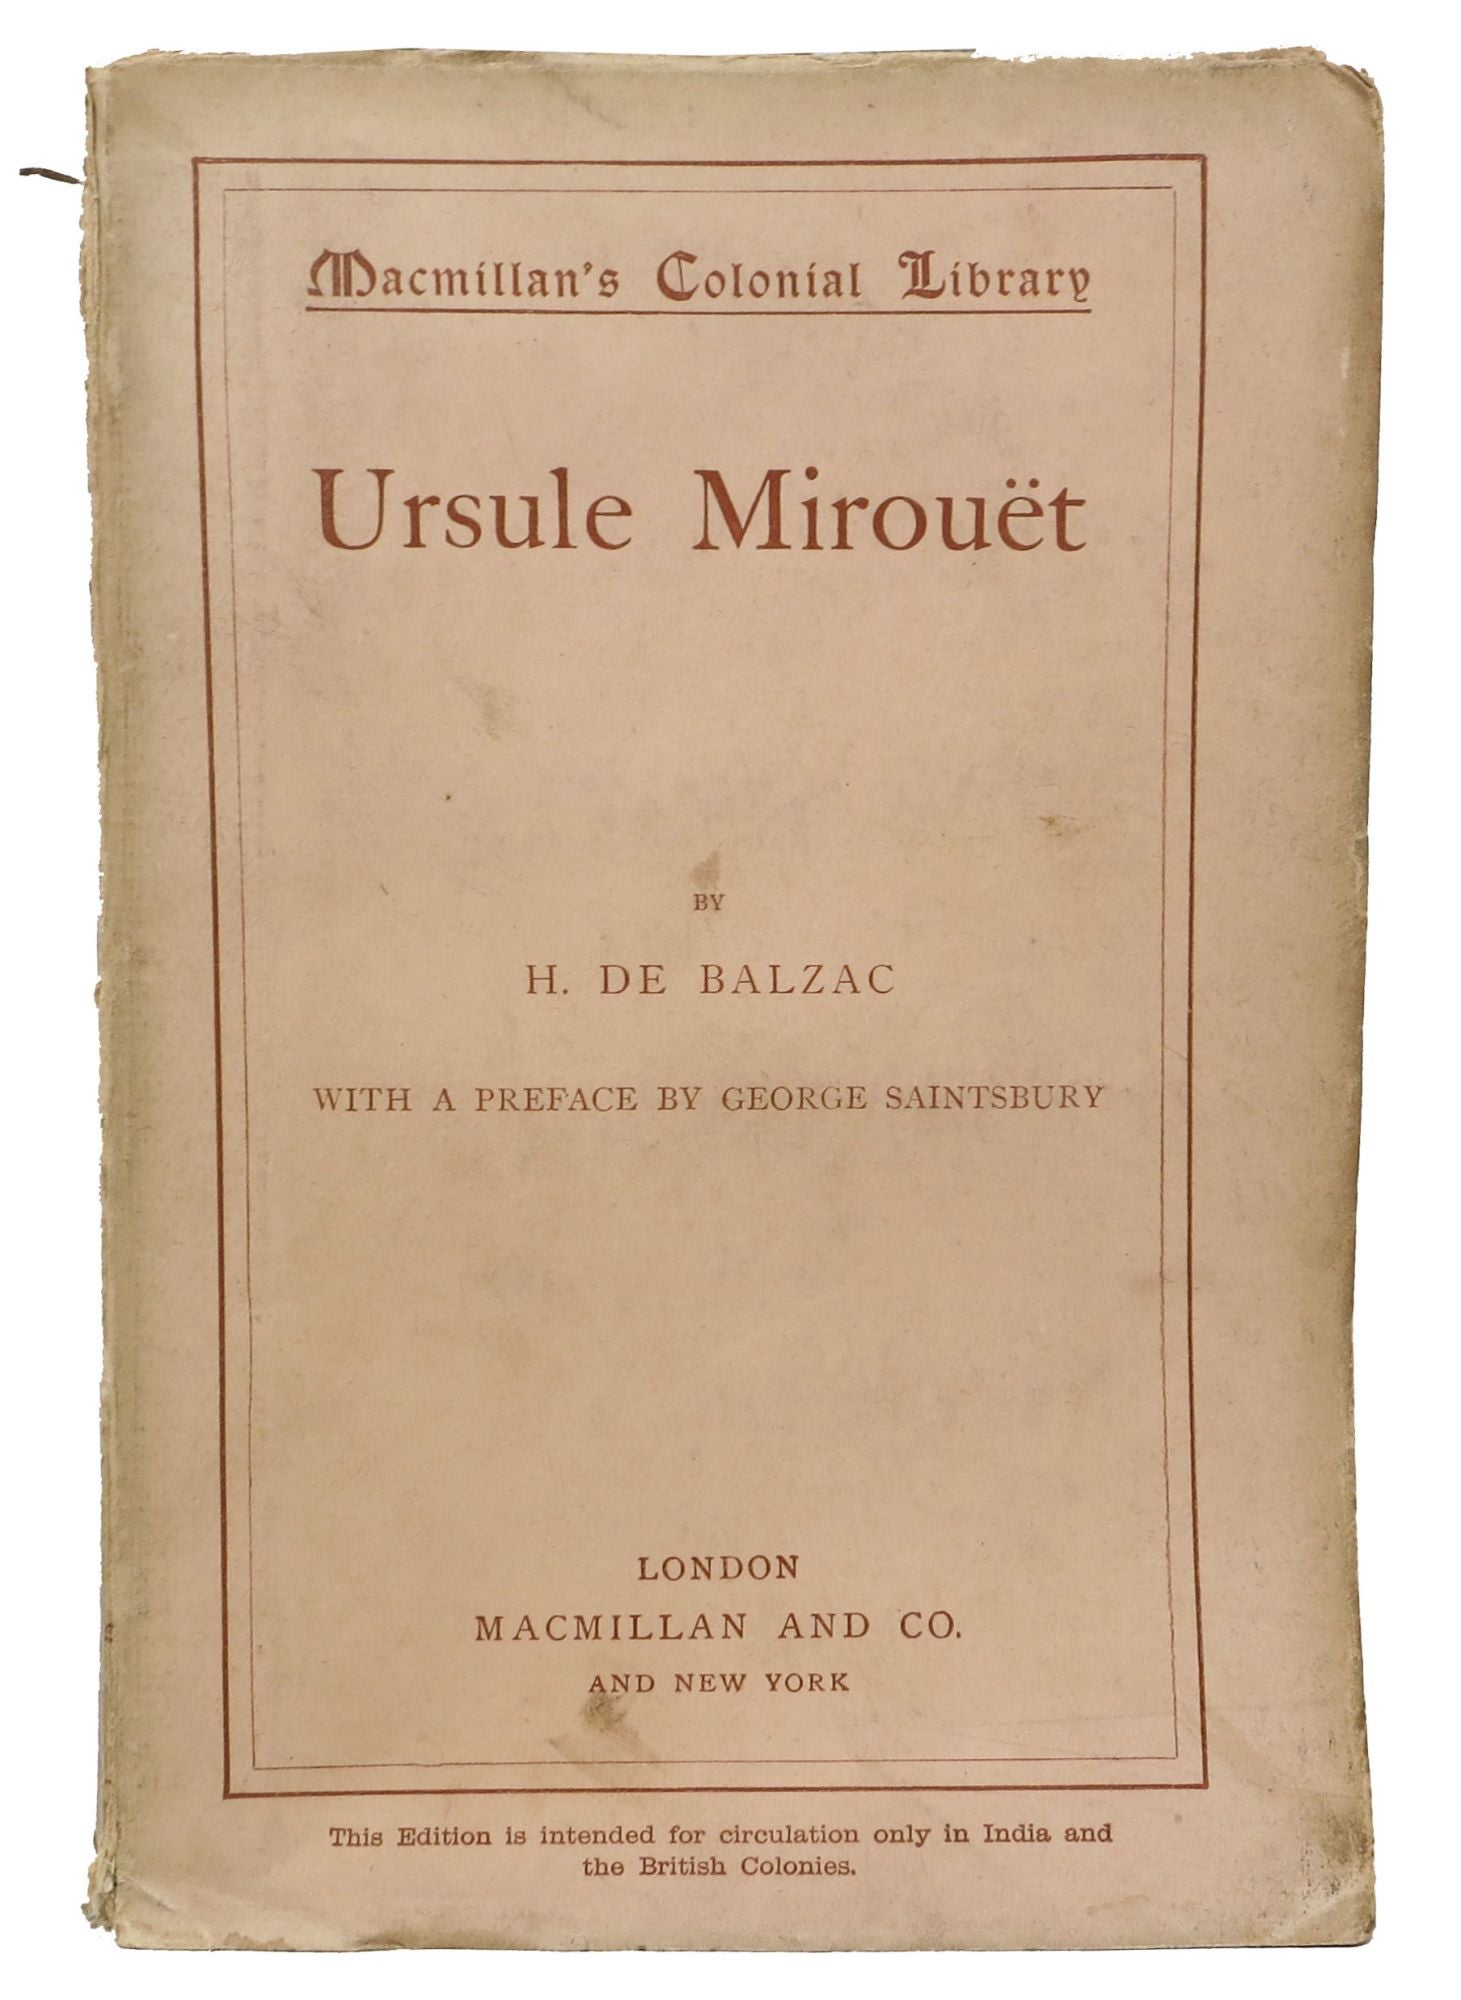 Balzac, H. De [1799 - 1850]. Bell, Clara - Translator. Saintsbury, George [1845 - 1933] - Contributor - URSULE MIROUT.; Macmillan's Colonial Library No. 255